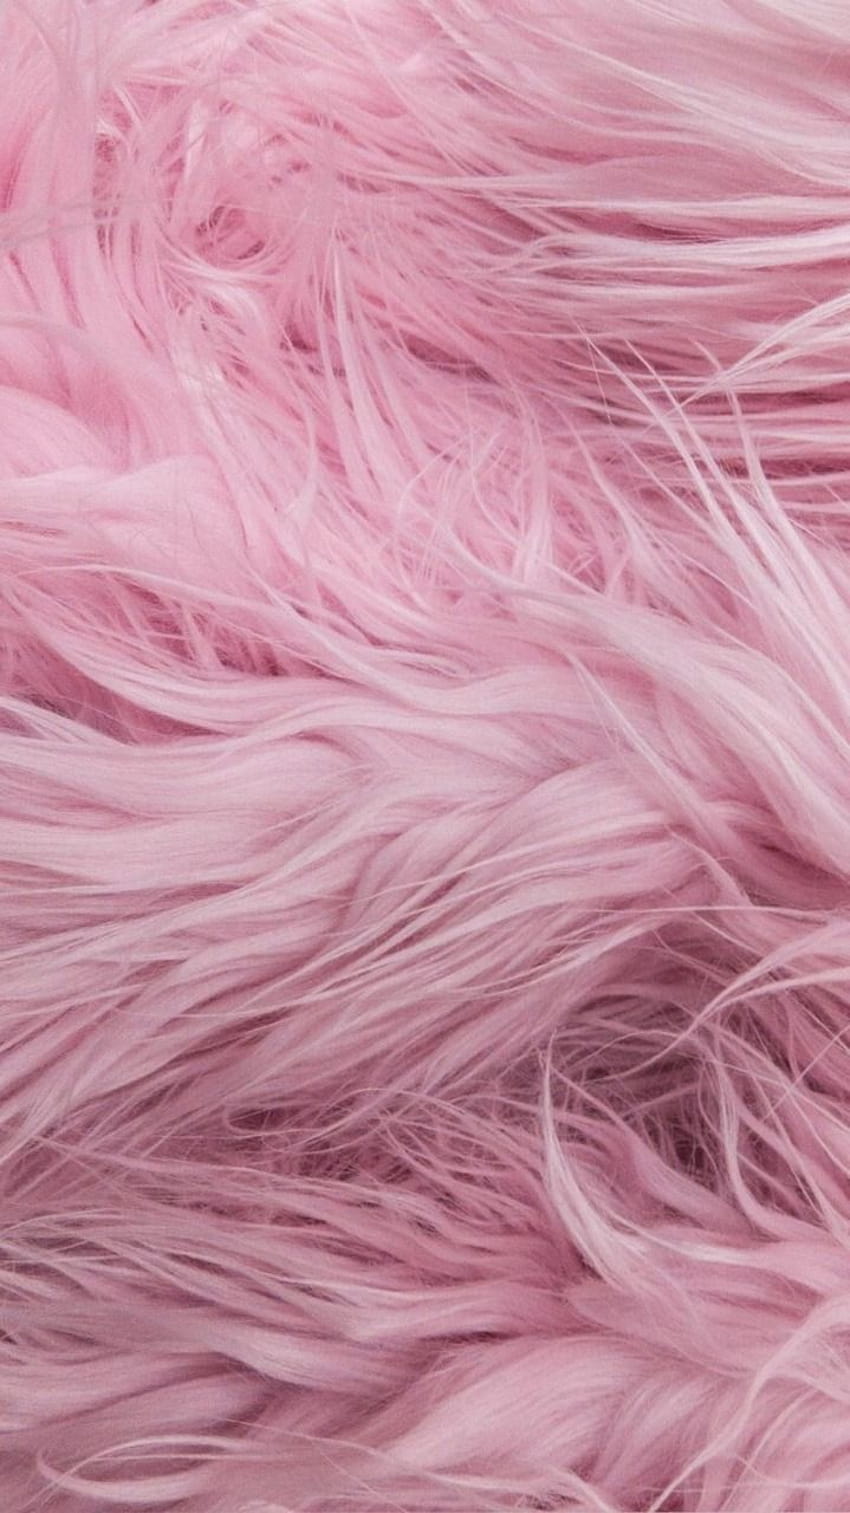 Pink Fur Pictures  Download Free Images on Unsplash